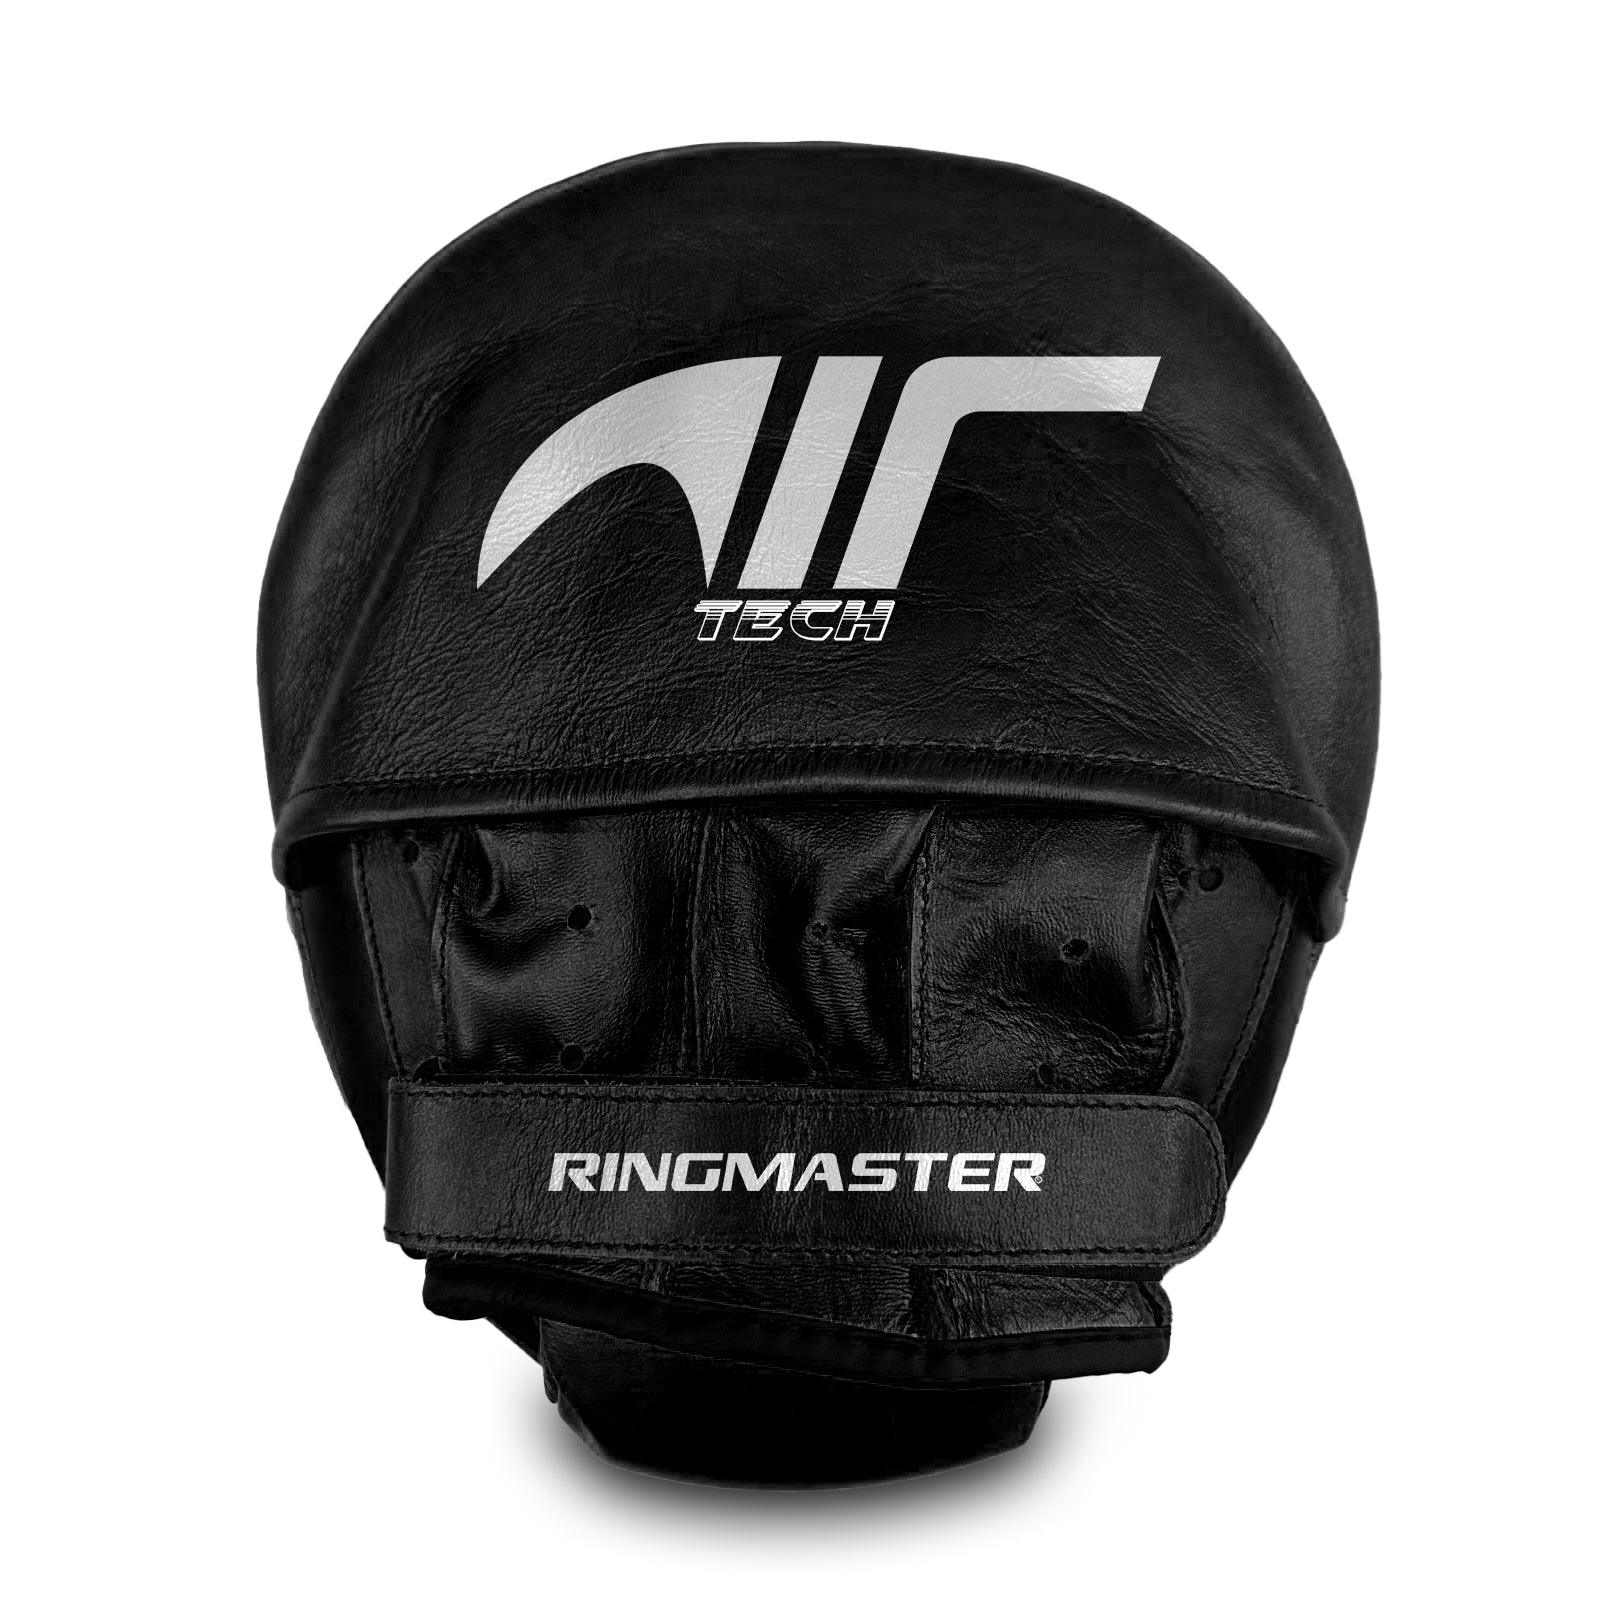 RingMaster Sports Air Pads Focus Mitts Black image 2